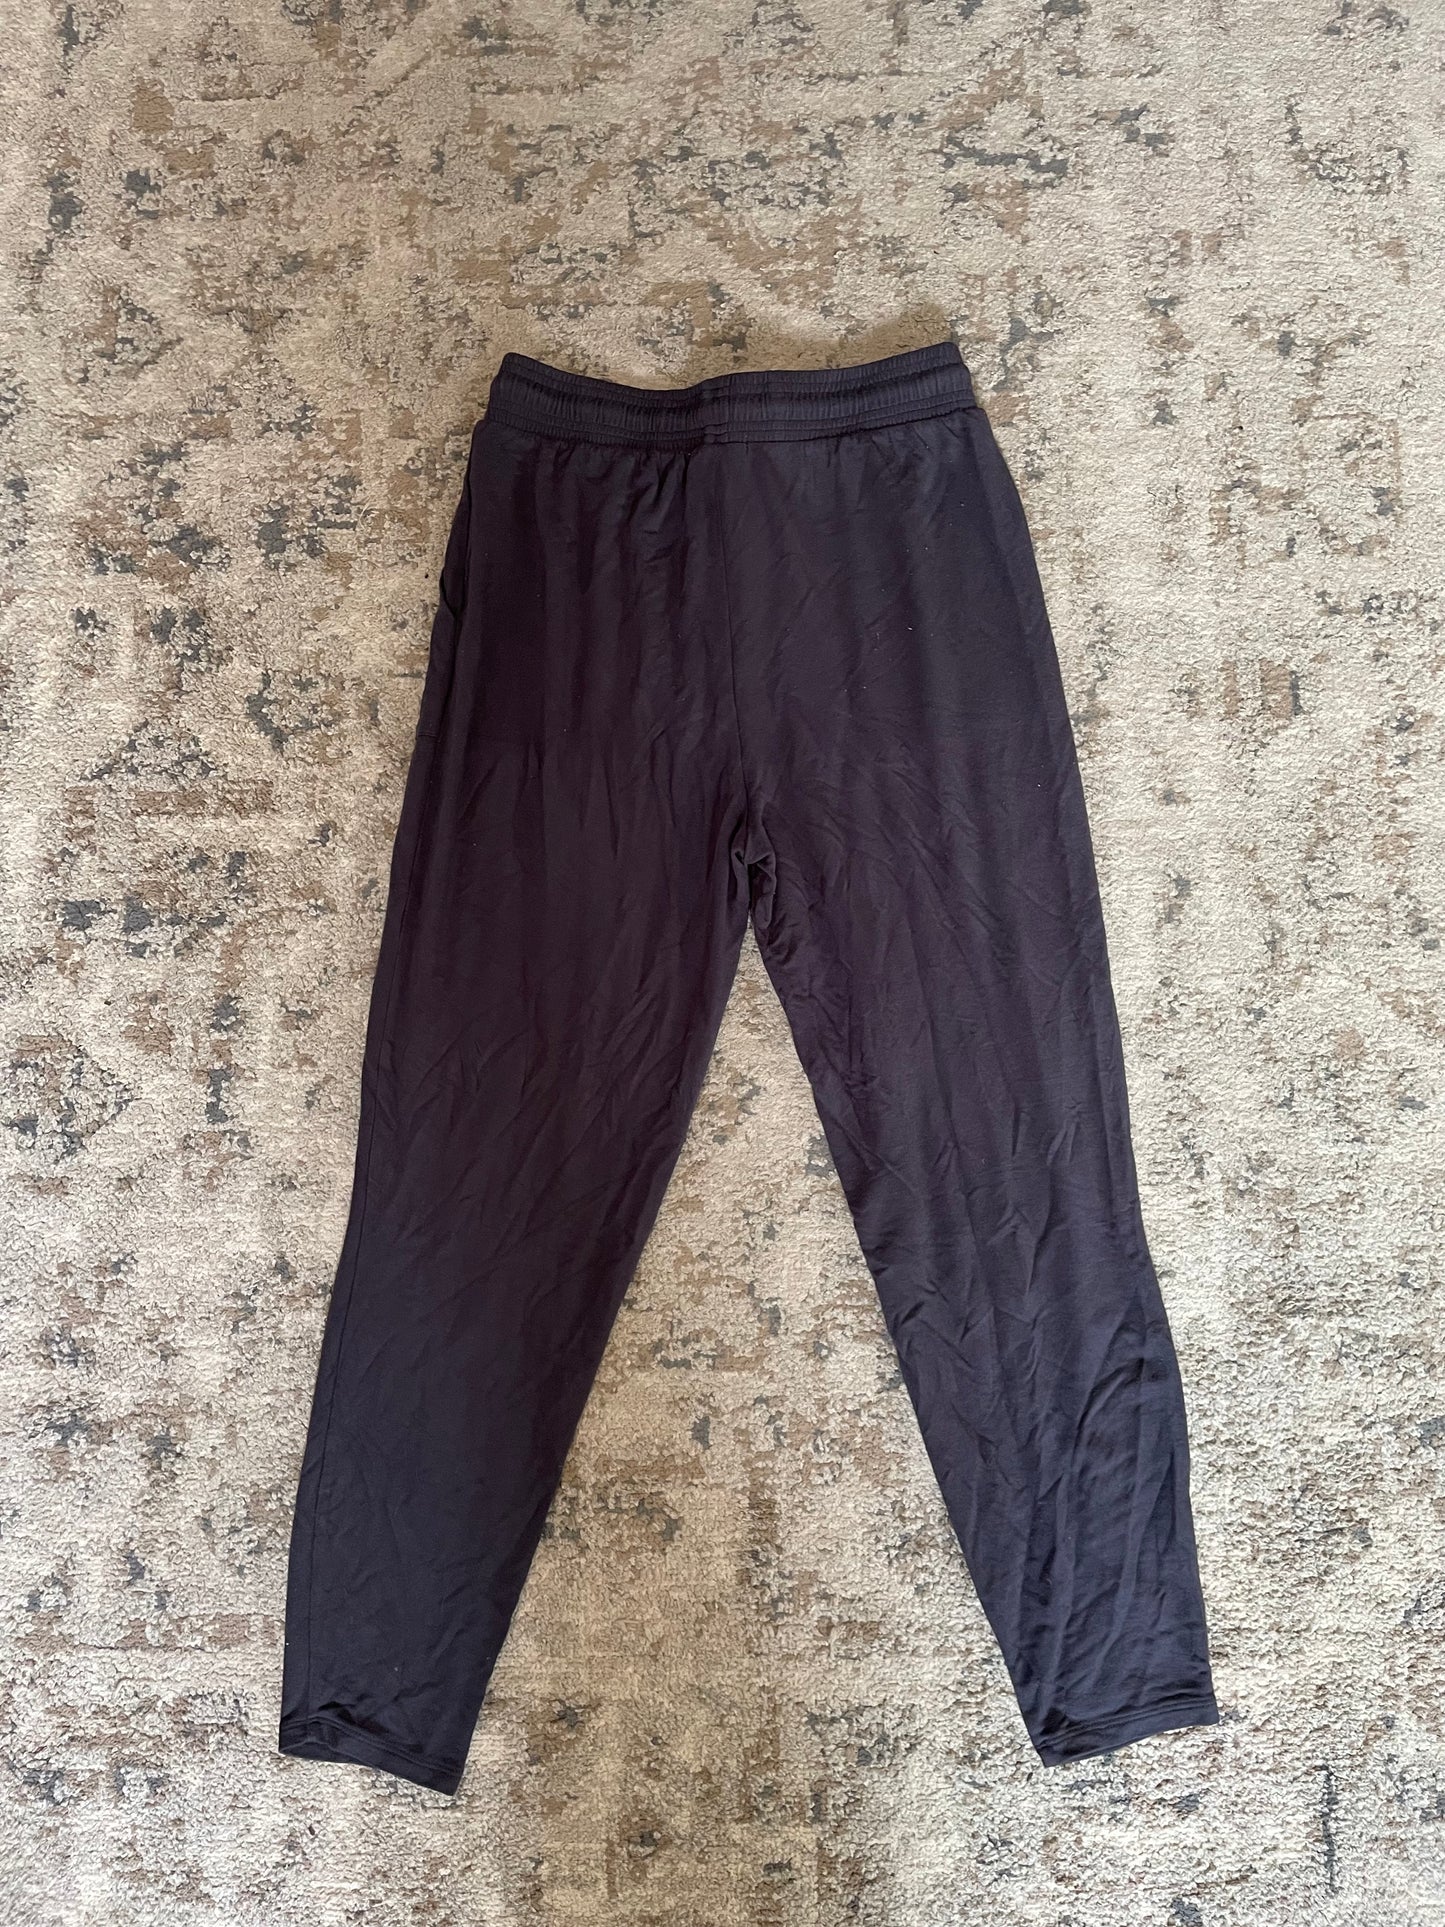 Z Supply Women’s Size S Pajama/Jogger Pant